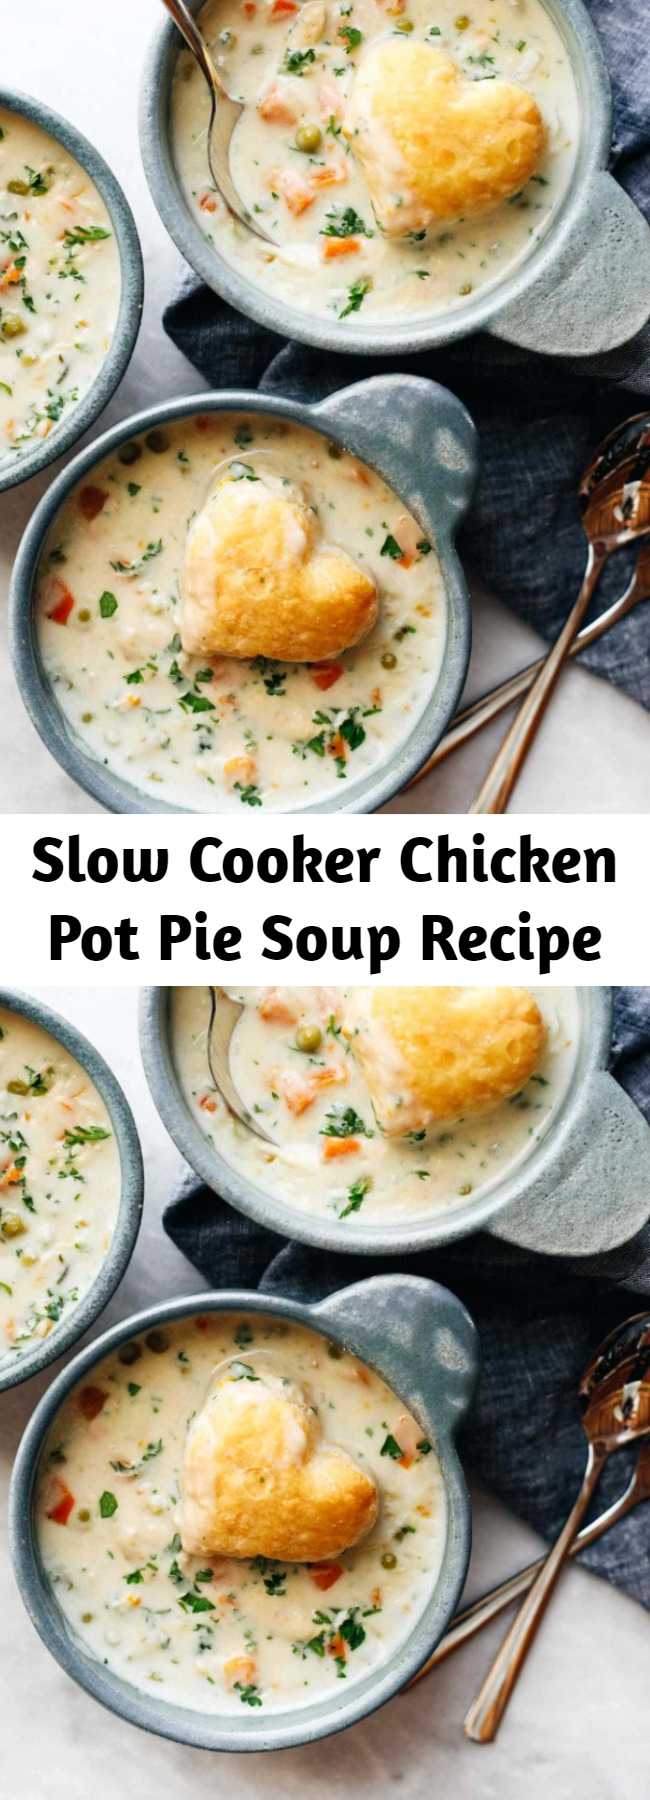 Slow Cooker Chicken Pot Pie Soup Recipe - Slow Cooker Chicken Pot Pie Soup – low maintenance creamy winter comfort food, made from scratch! #chickenpotpie #slowcooker #soup #crockpot #recipe